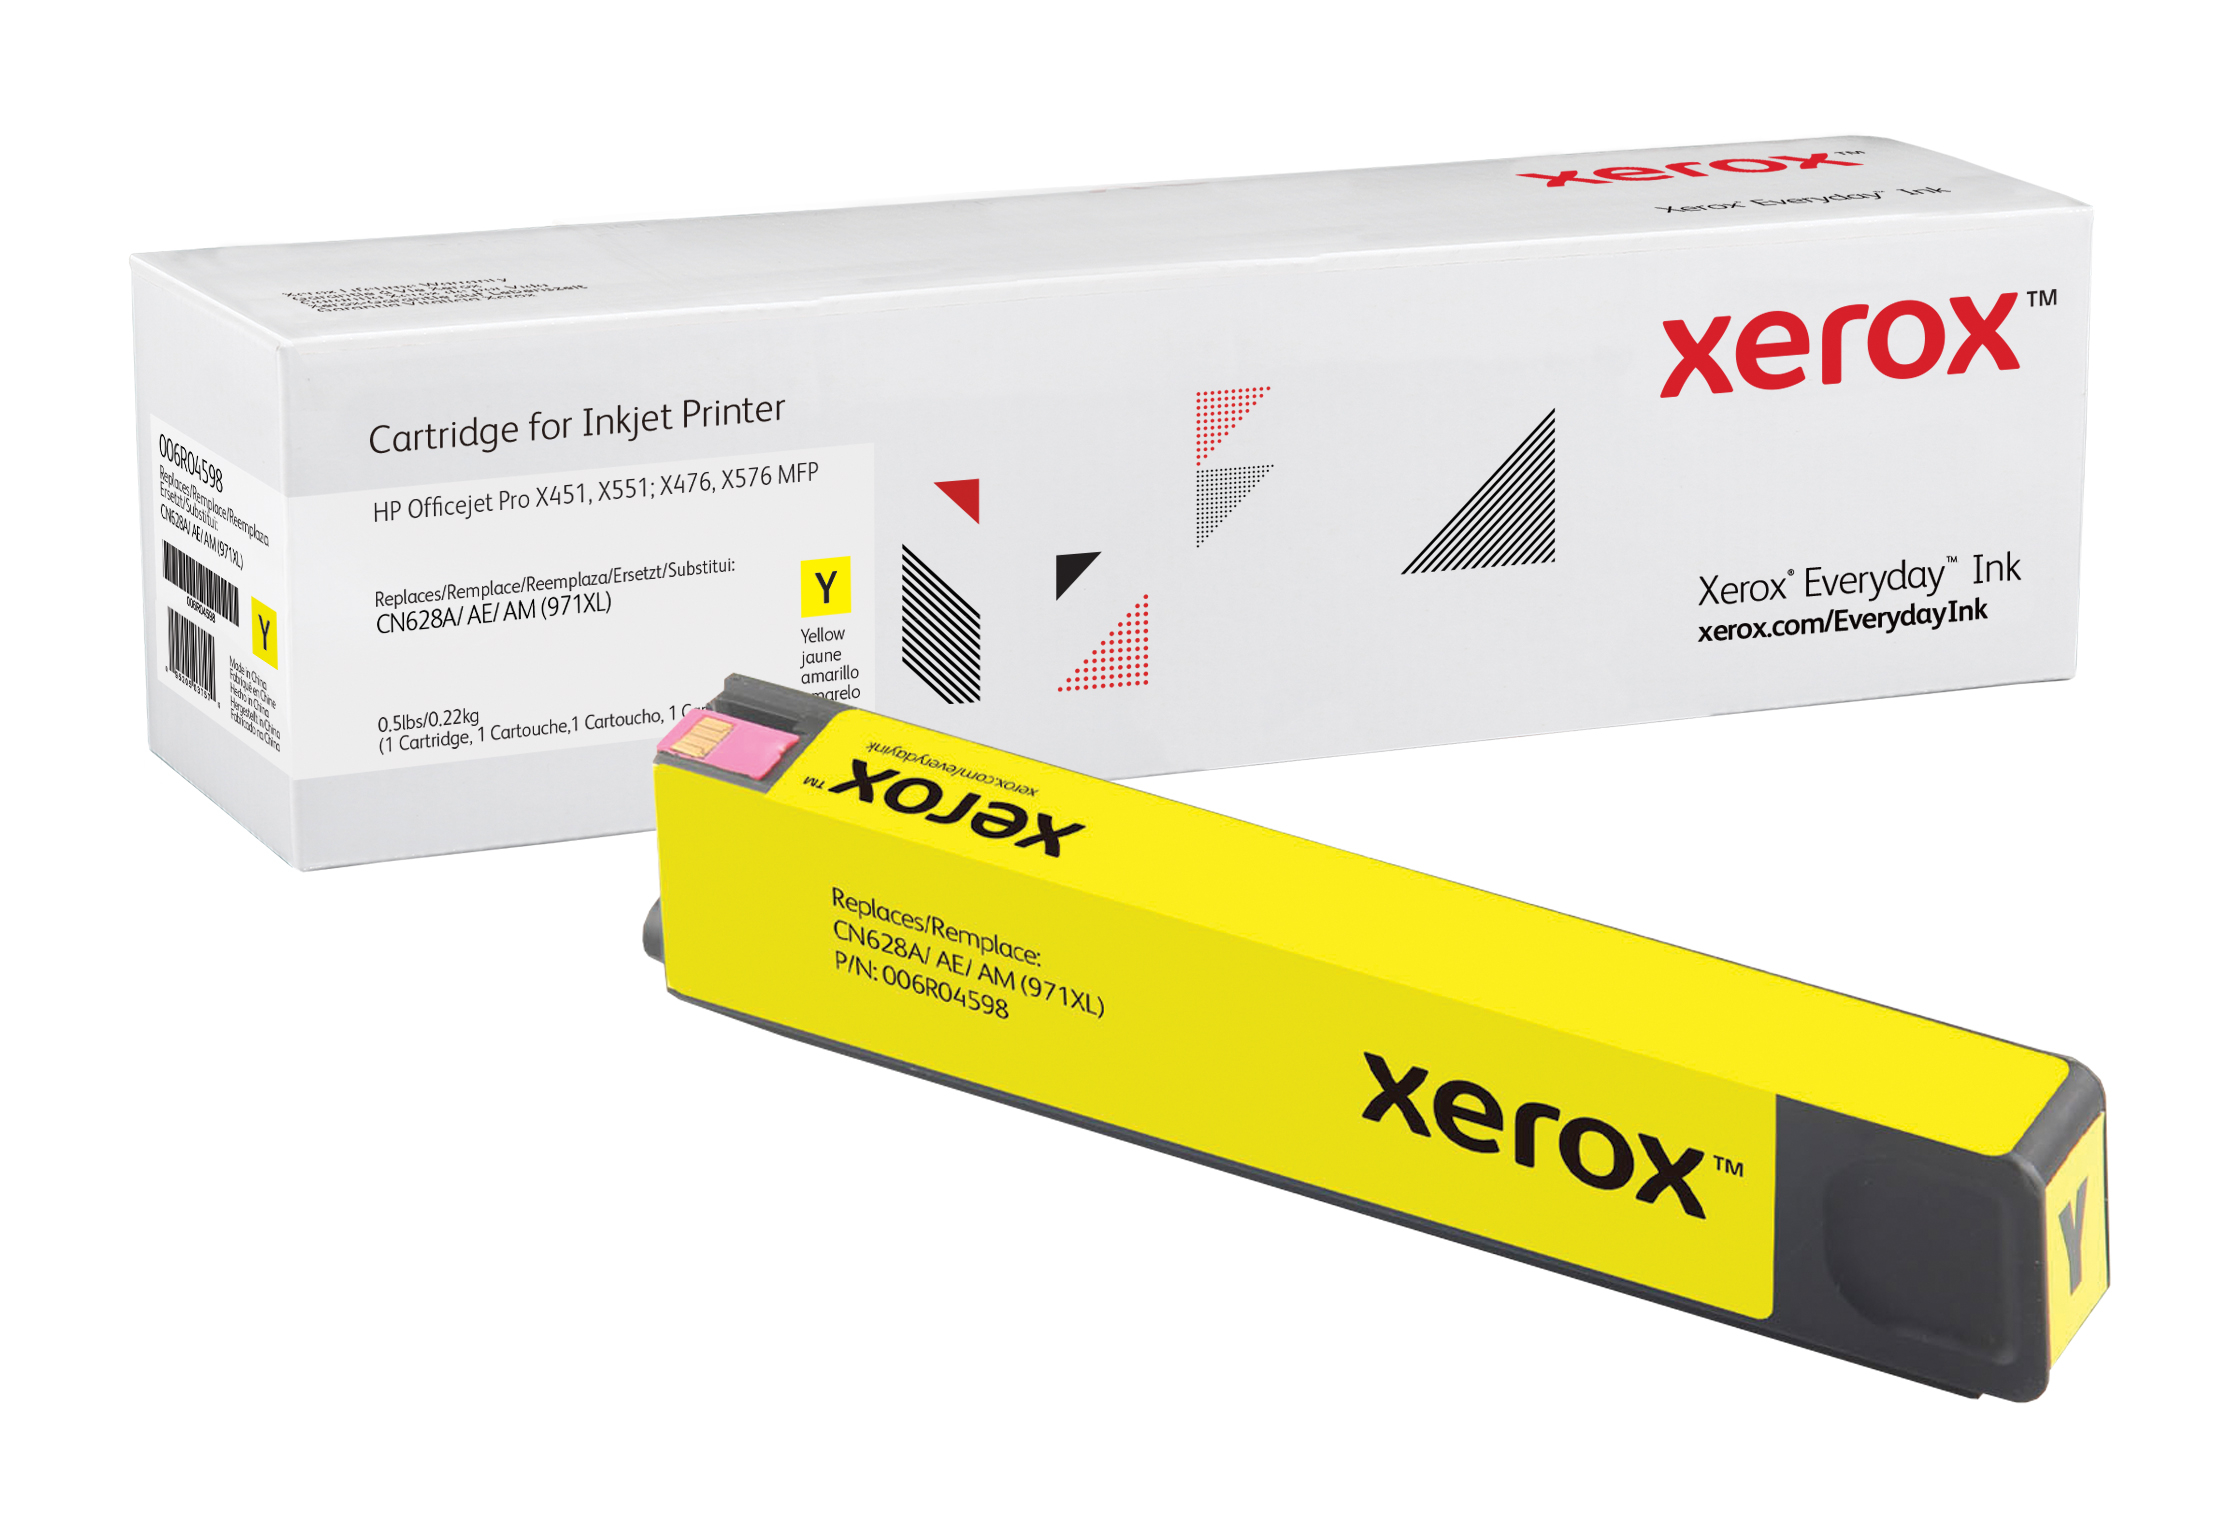 Xerox Bond MP Yellow Wove 20# 8.5